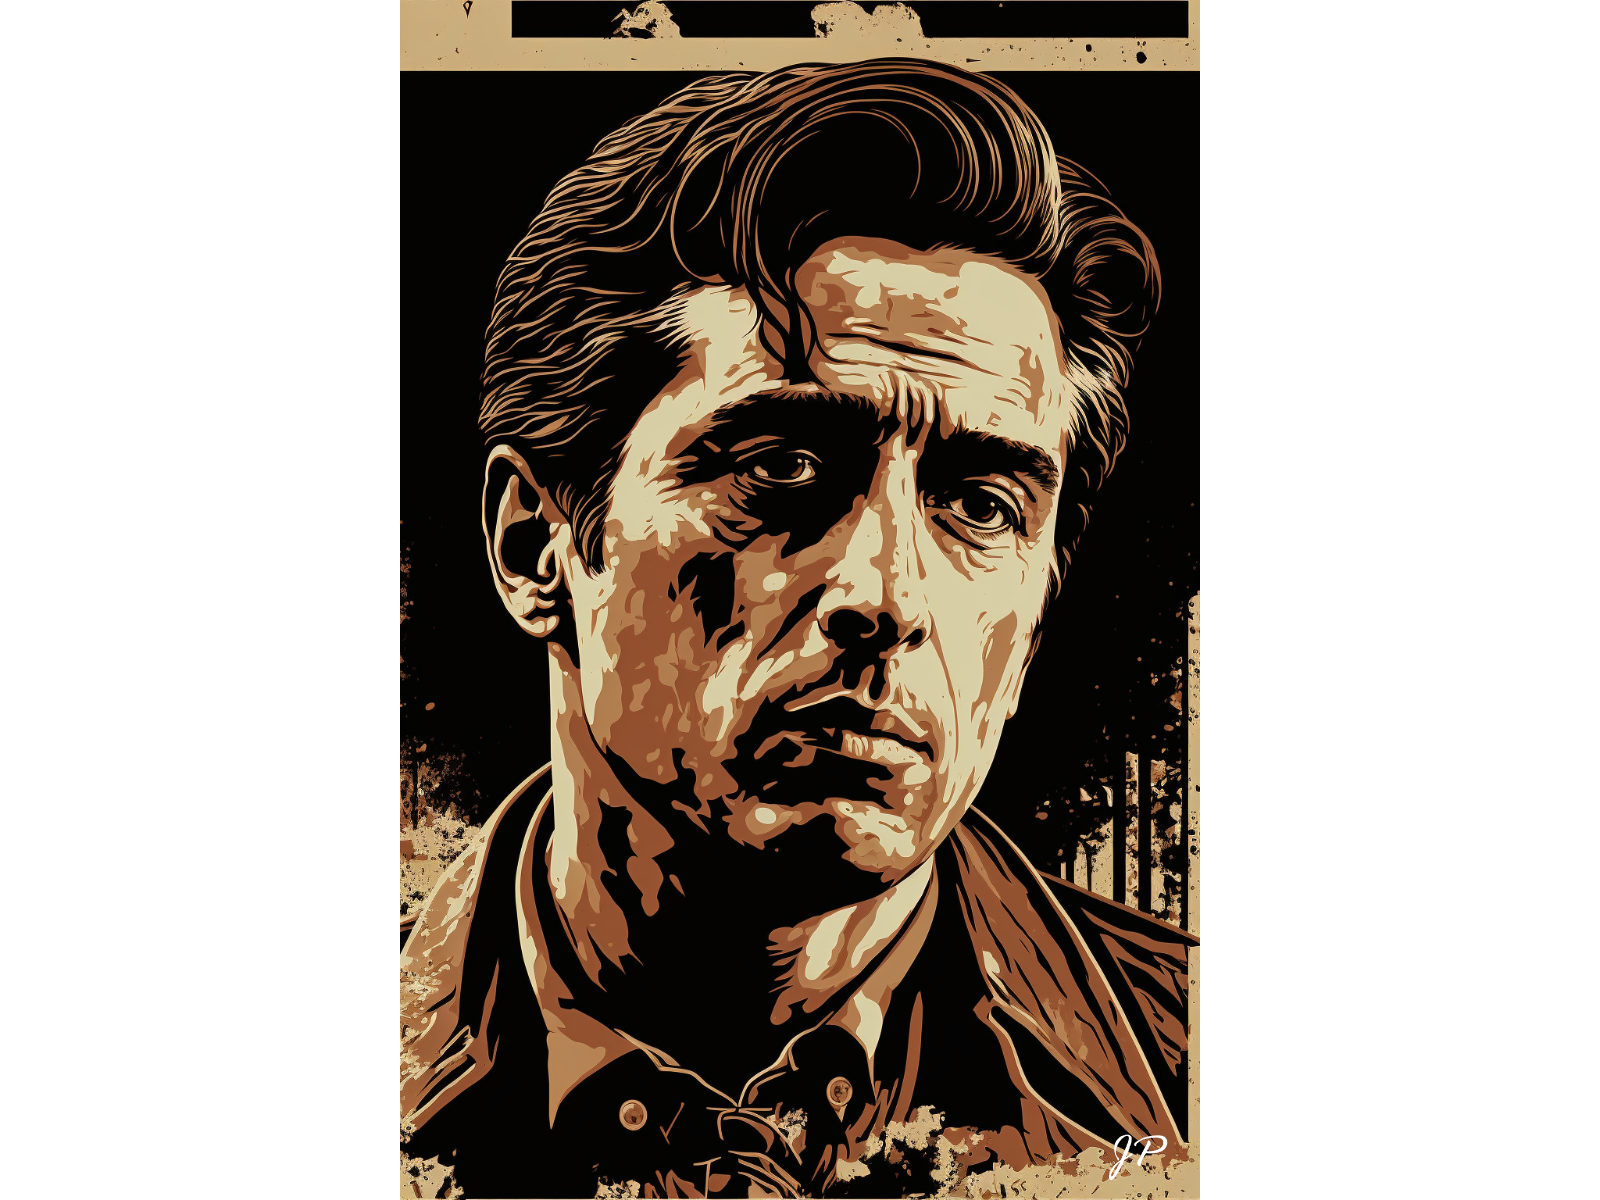 Al Pacino as Michael Corleone Woodcut by ai_ceberg on Dribbble